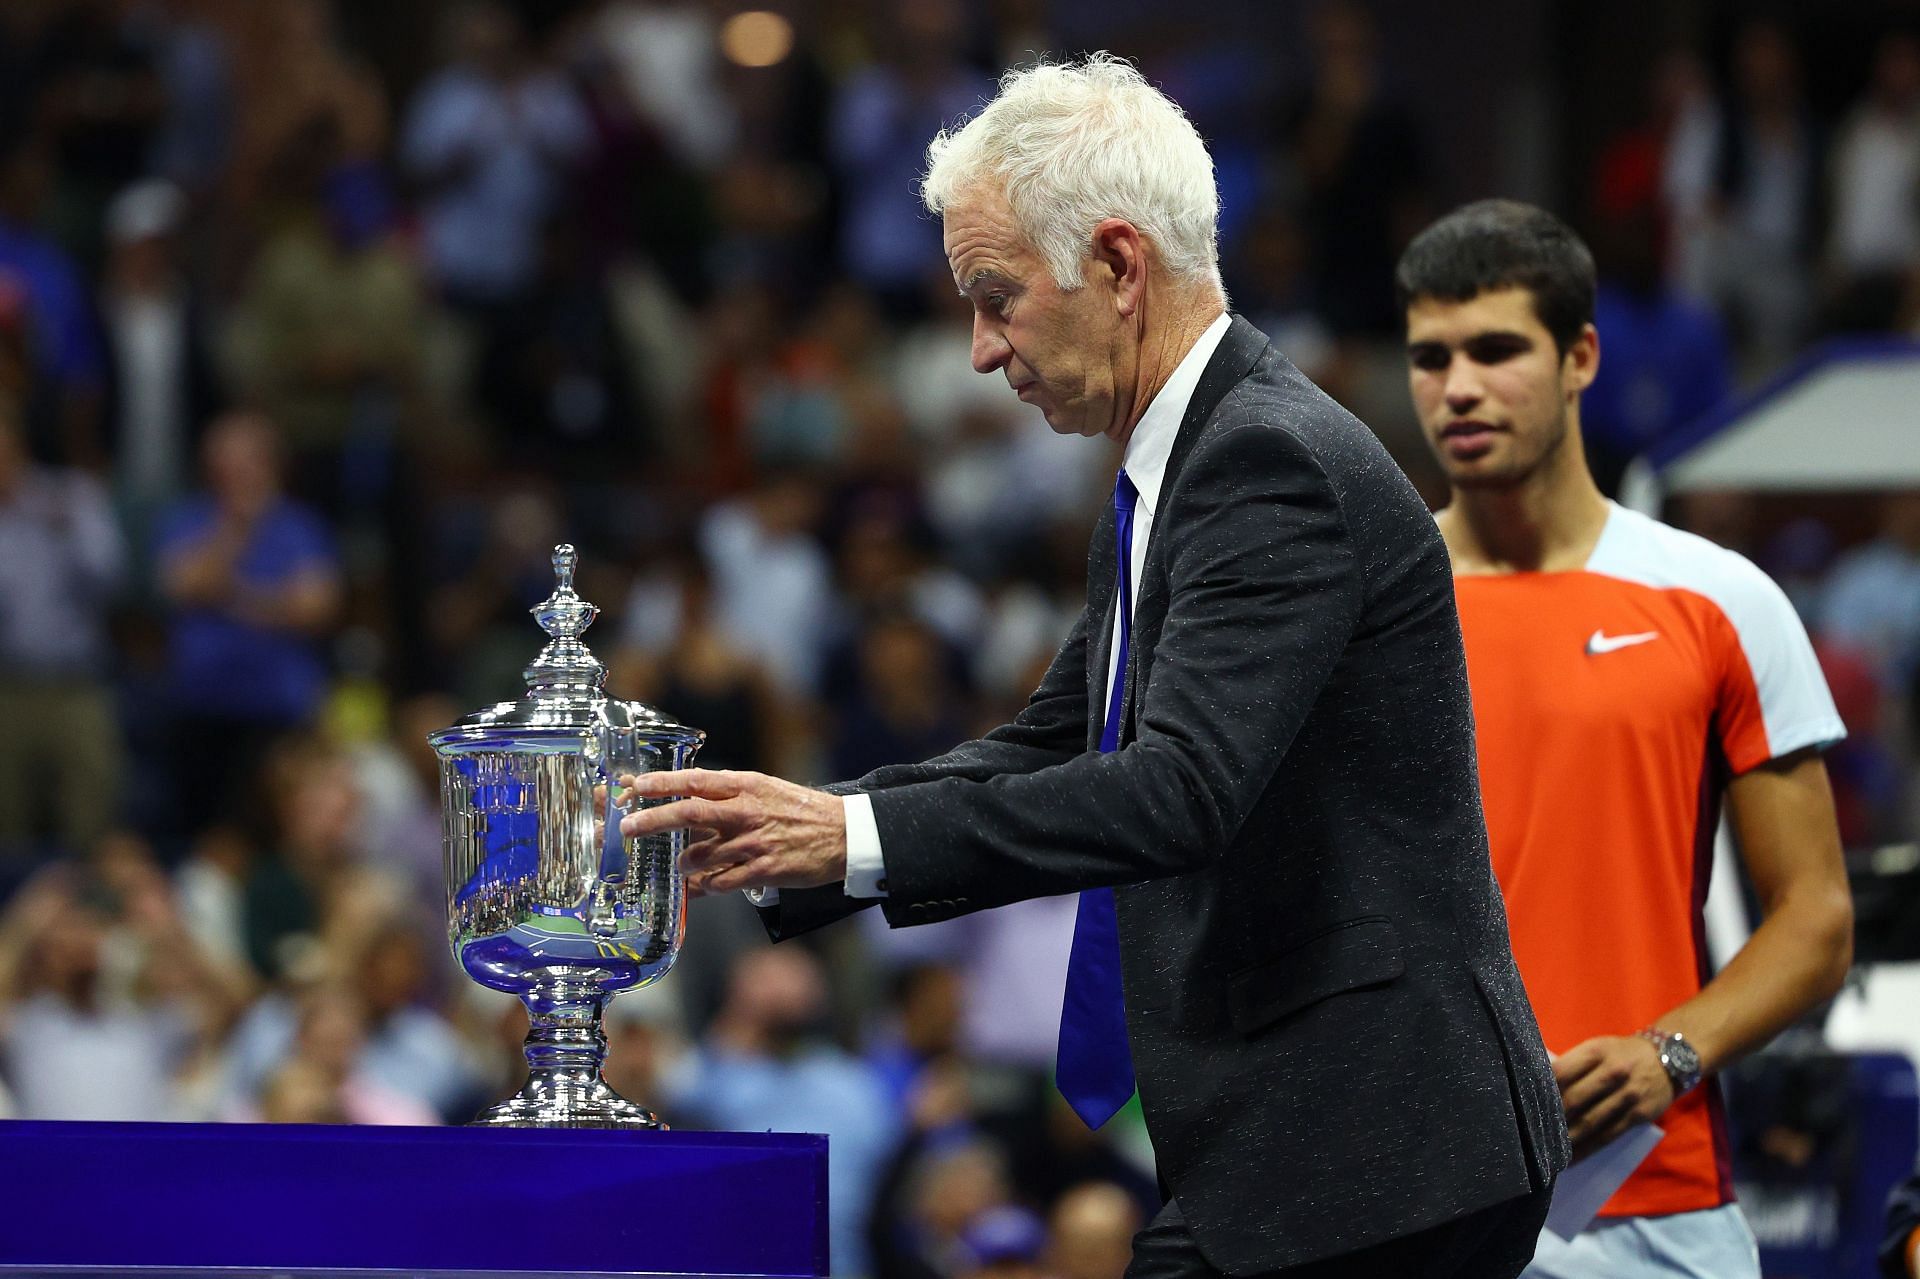 John McEnroe presents the 2022 US Open trophy to Carlos Alcaraz.